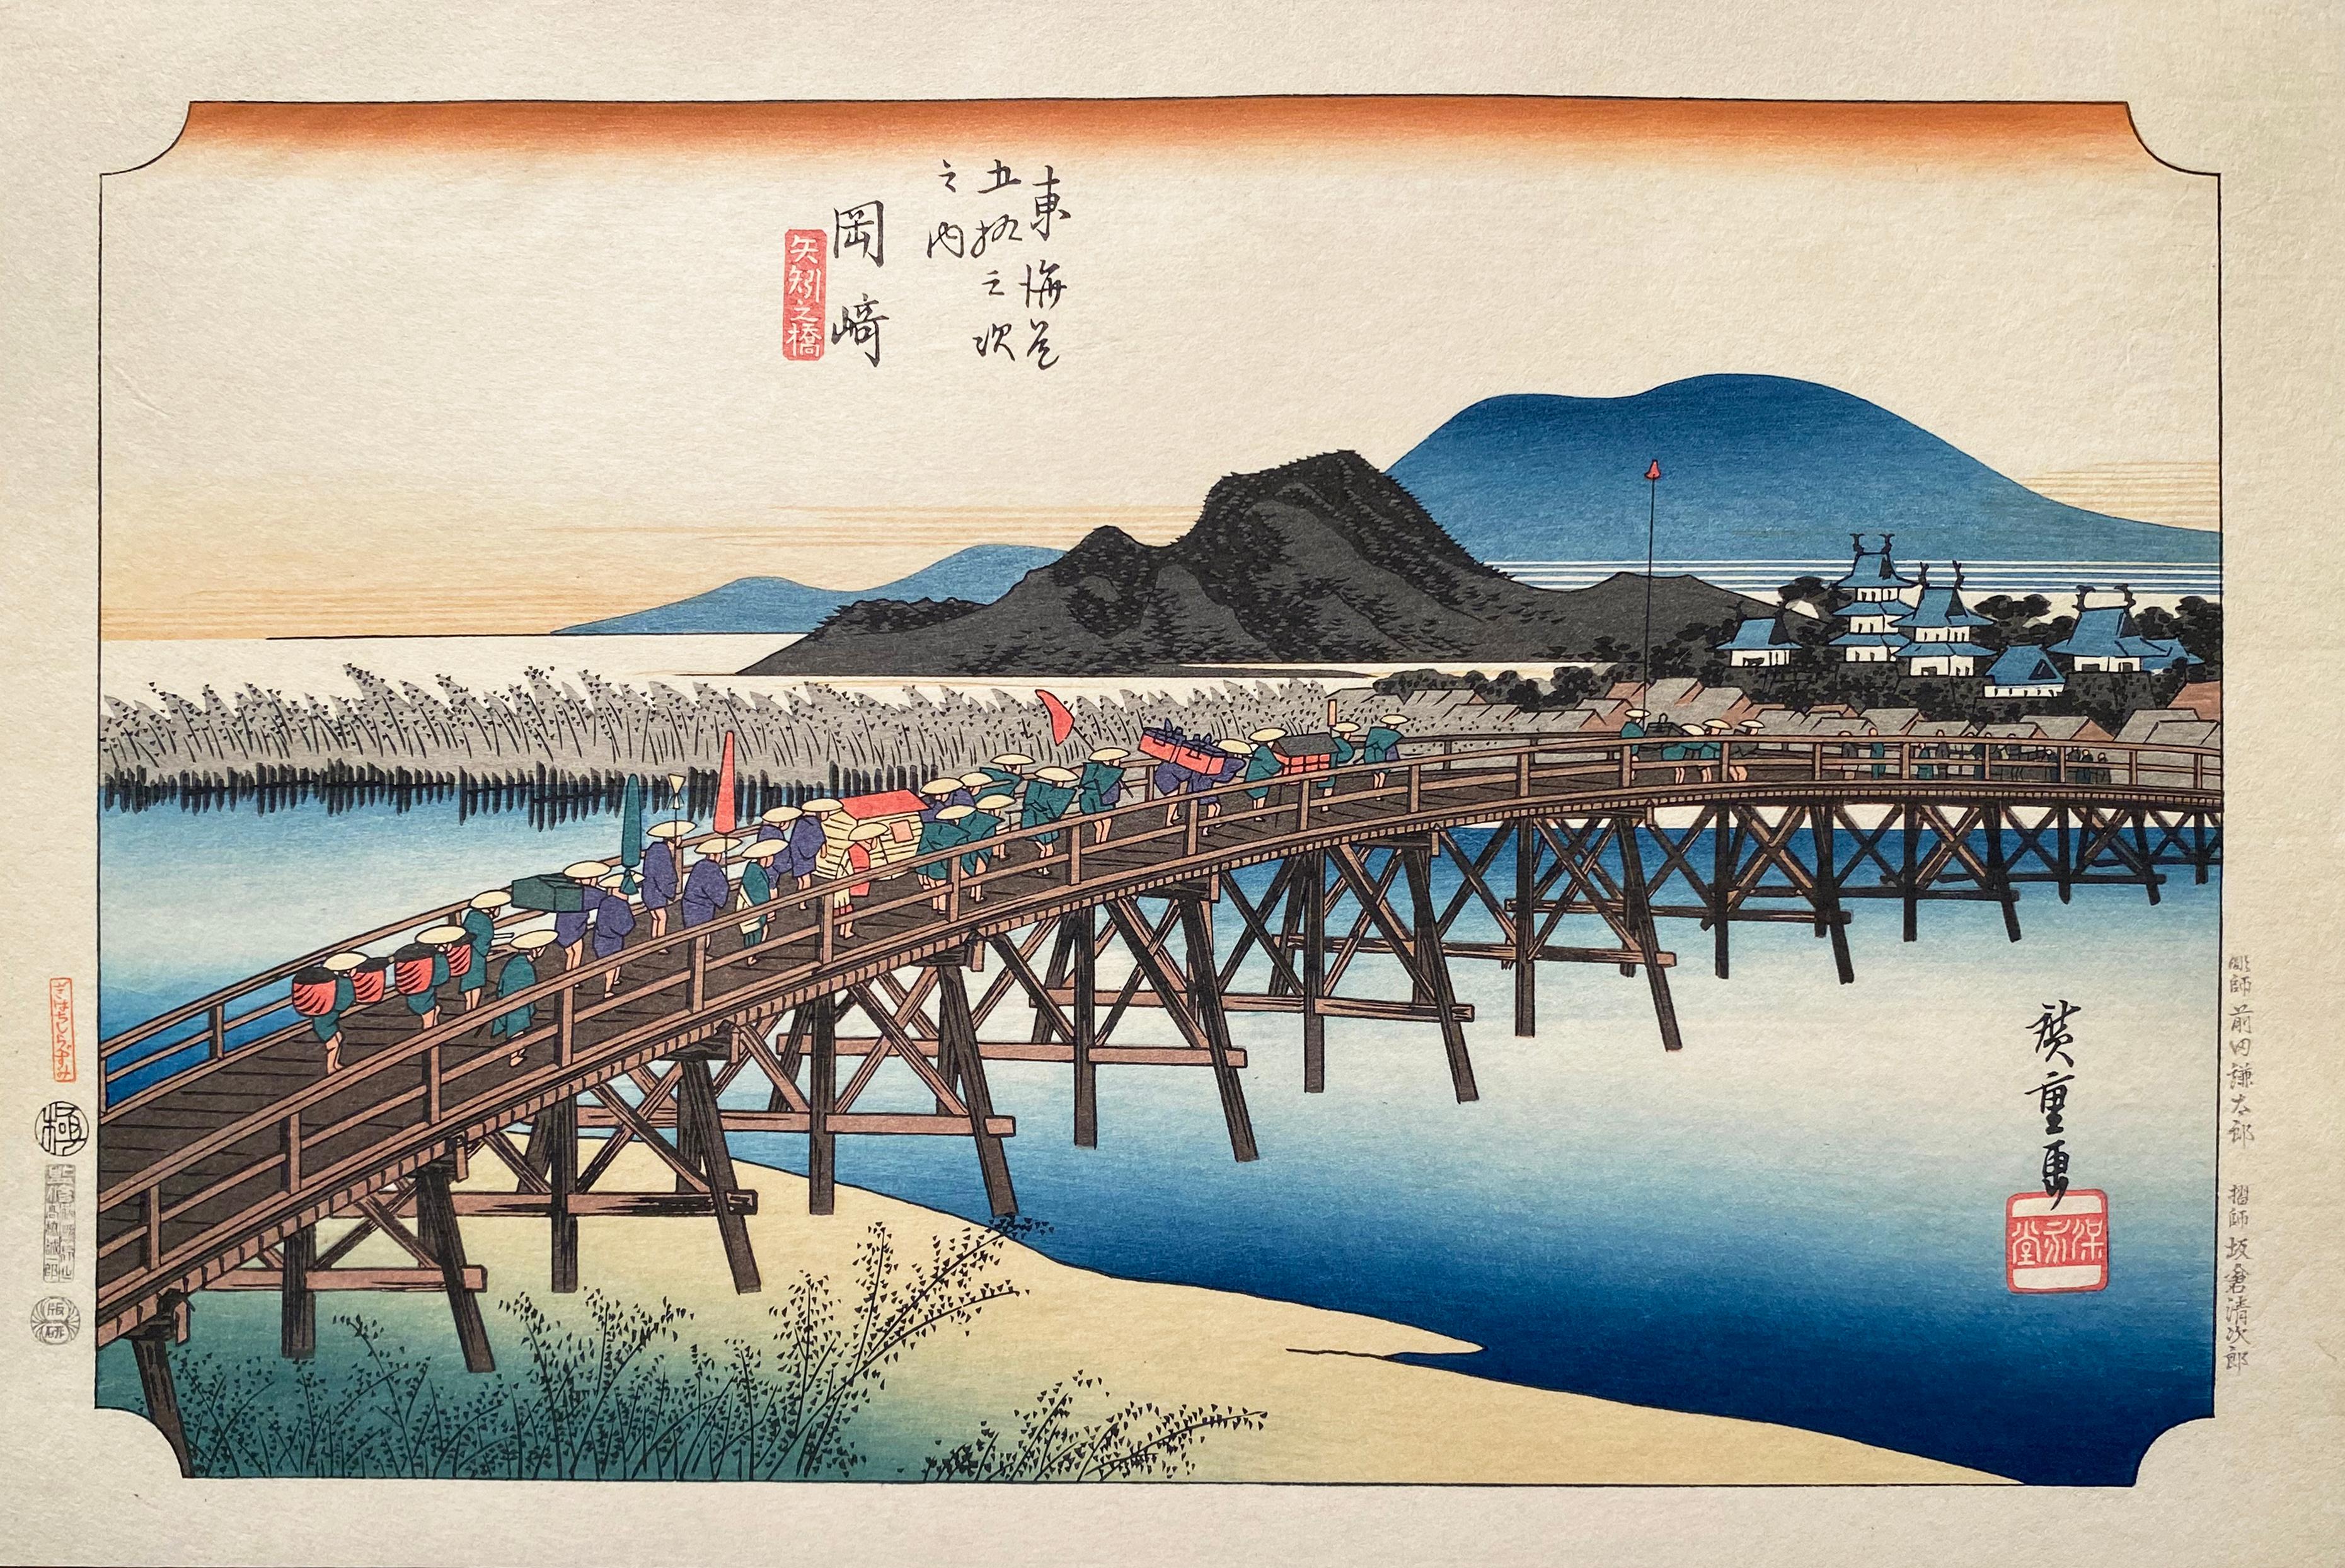 Utagawa Hiroshige (Ando Hiroshige) Landscape Print – Ansicht von Okazaki", nach Utagawa Hiroshige 歌川廣重, Ukiyo-e Holzschnitt, Tokaido